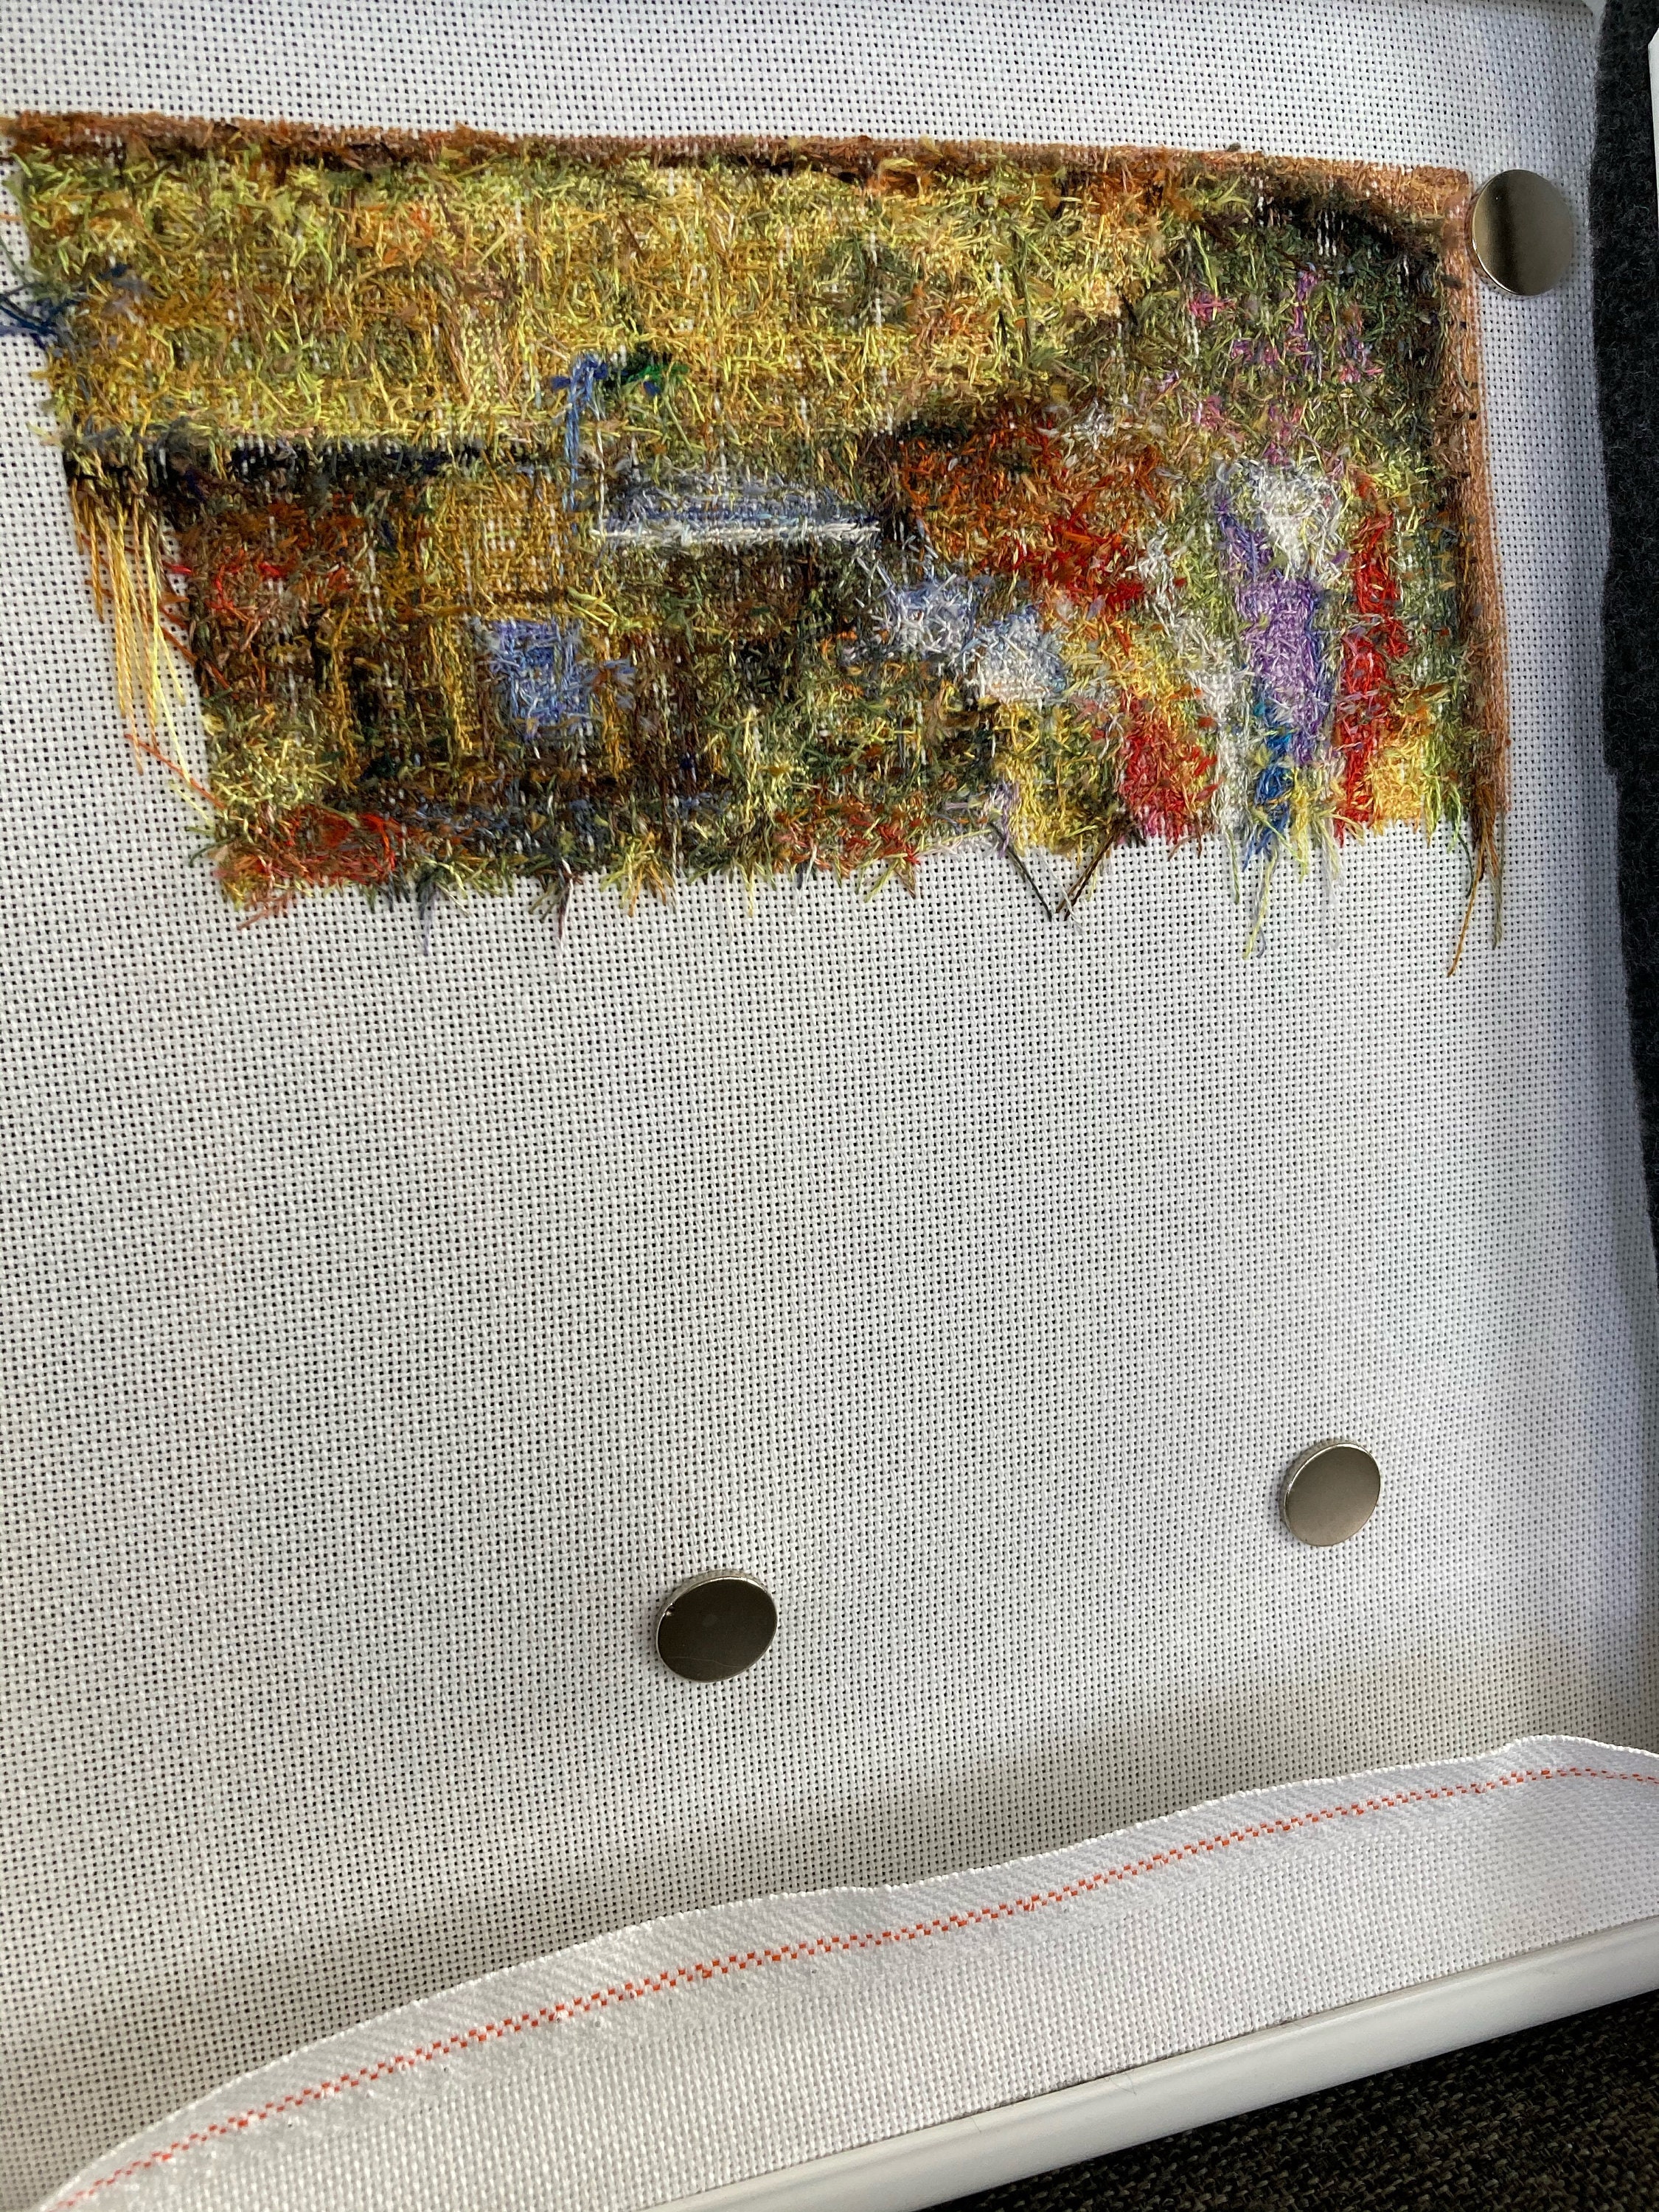 Embroidery Thread Bobbins Cross Stitch Pattern, Instant Download, PDF  Pattern 